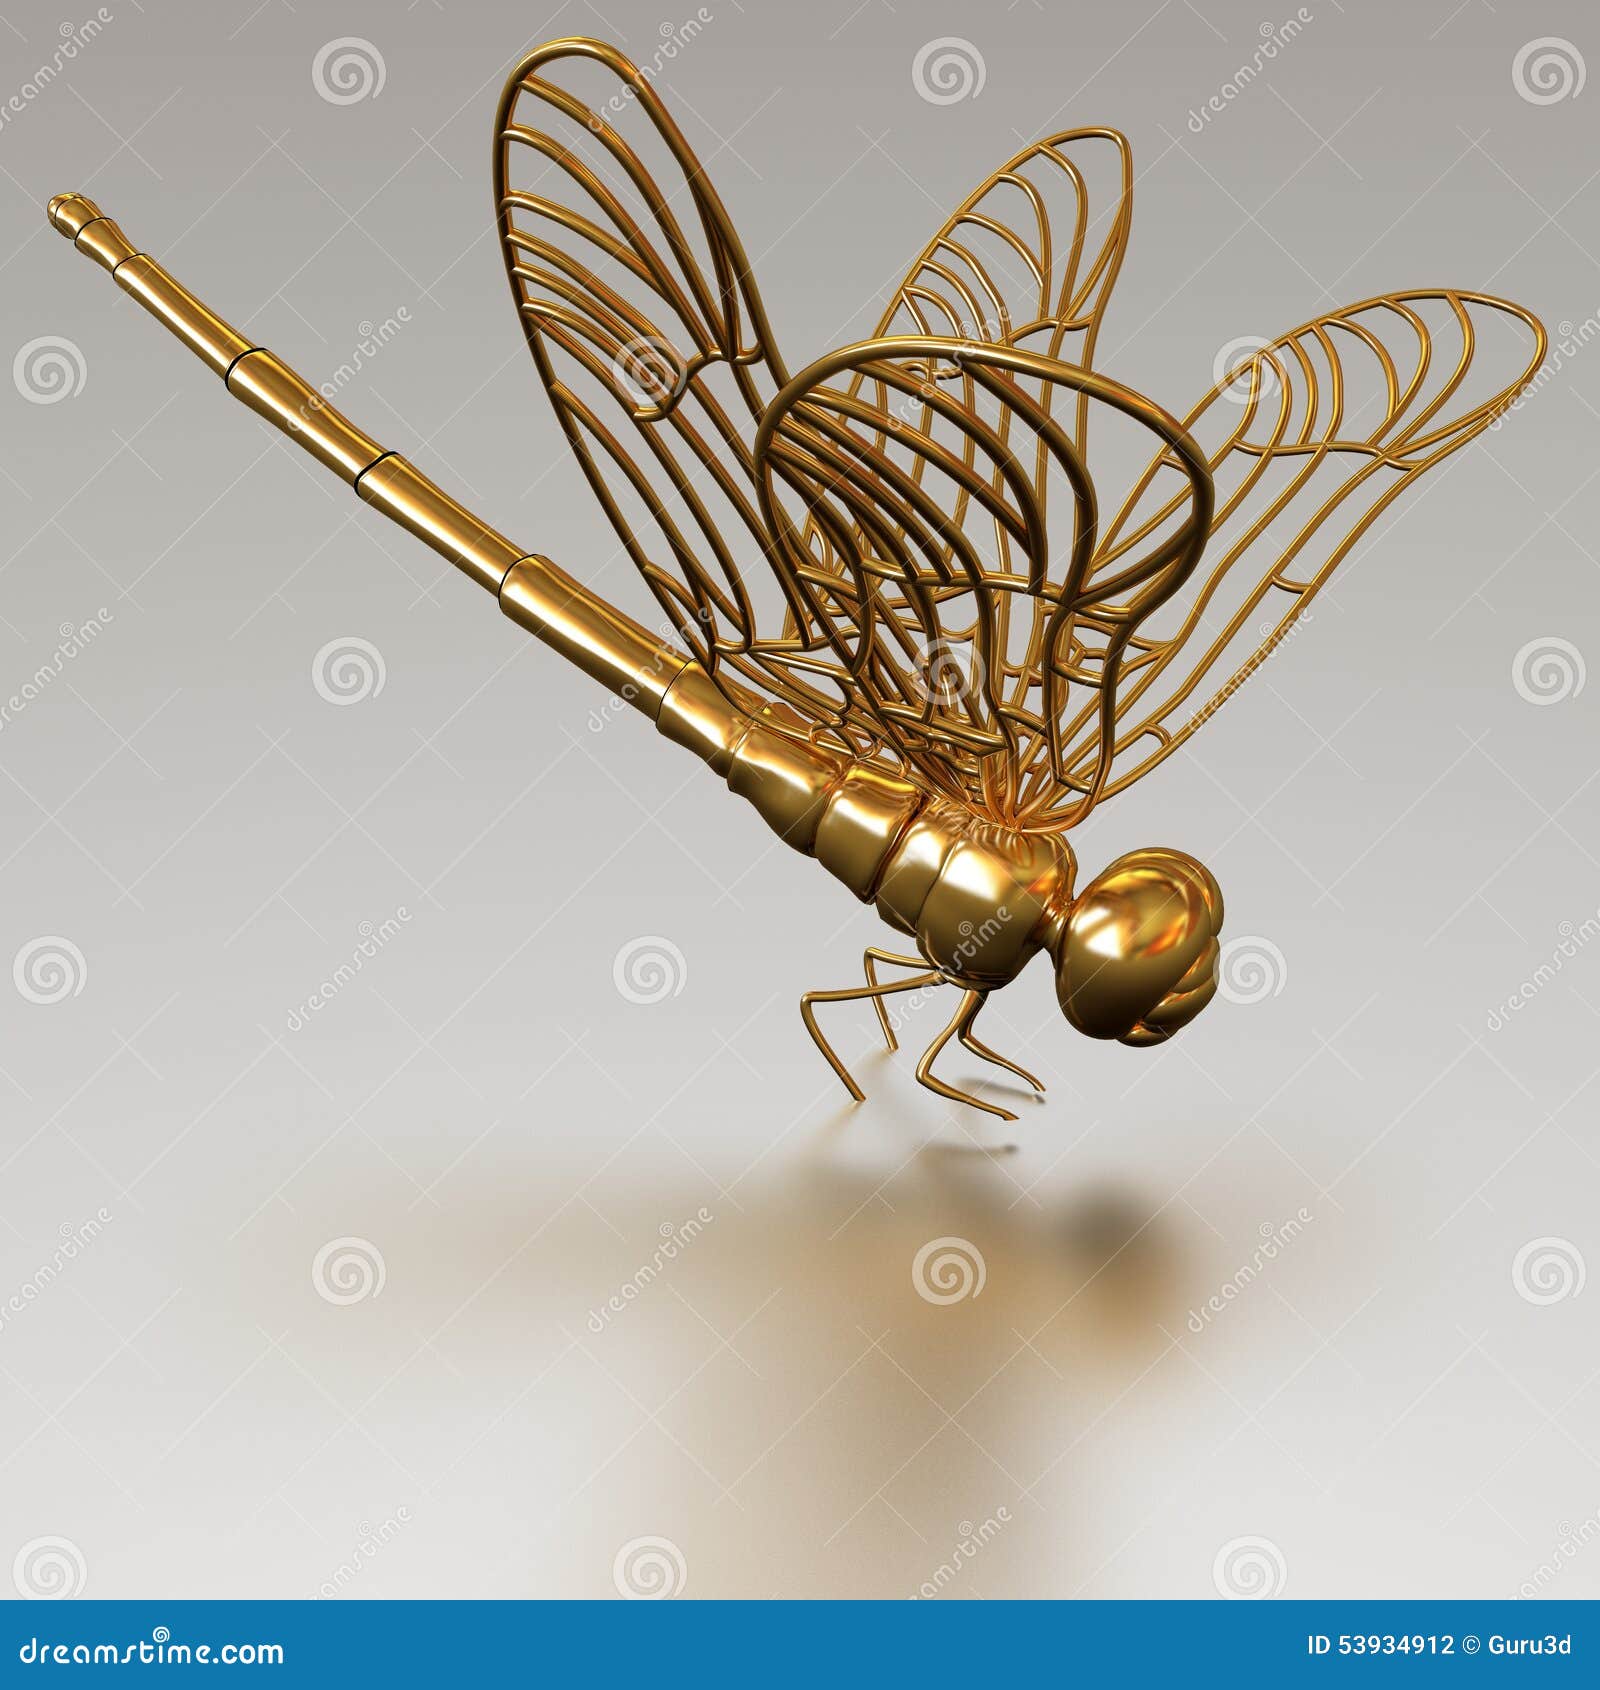 Gold dragonfly stock illustration. Illustration of closeup - 53934912